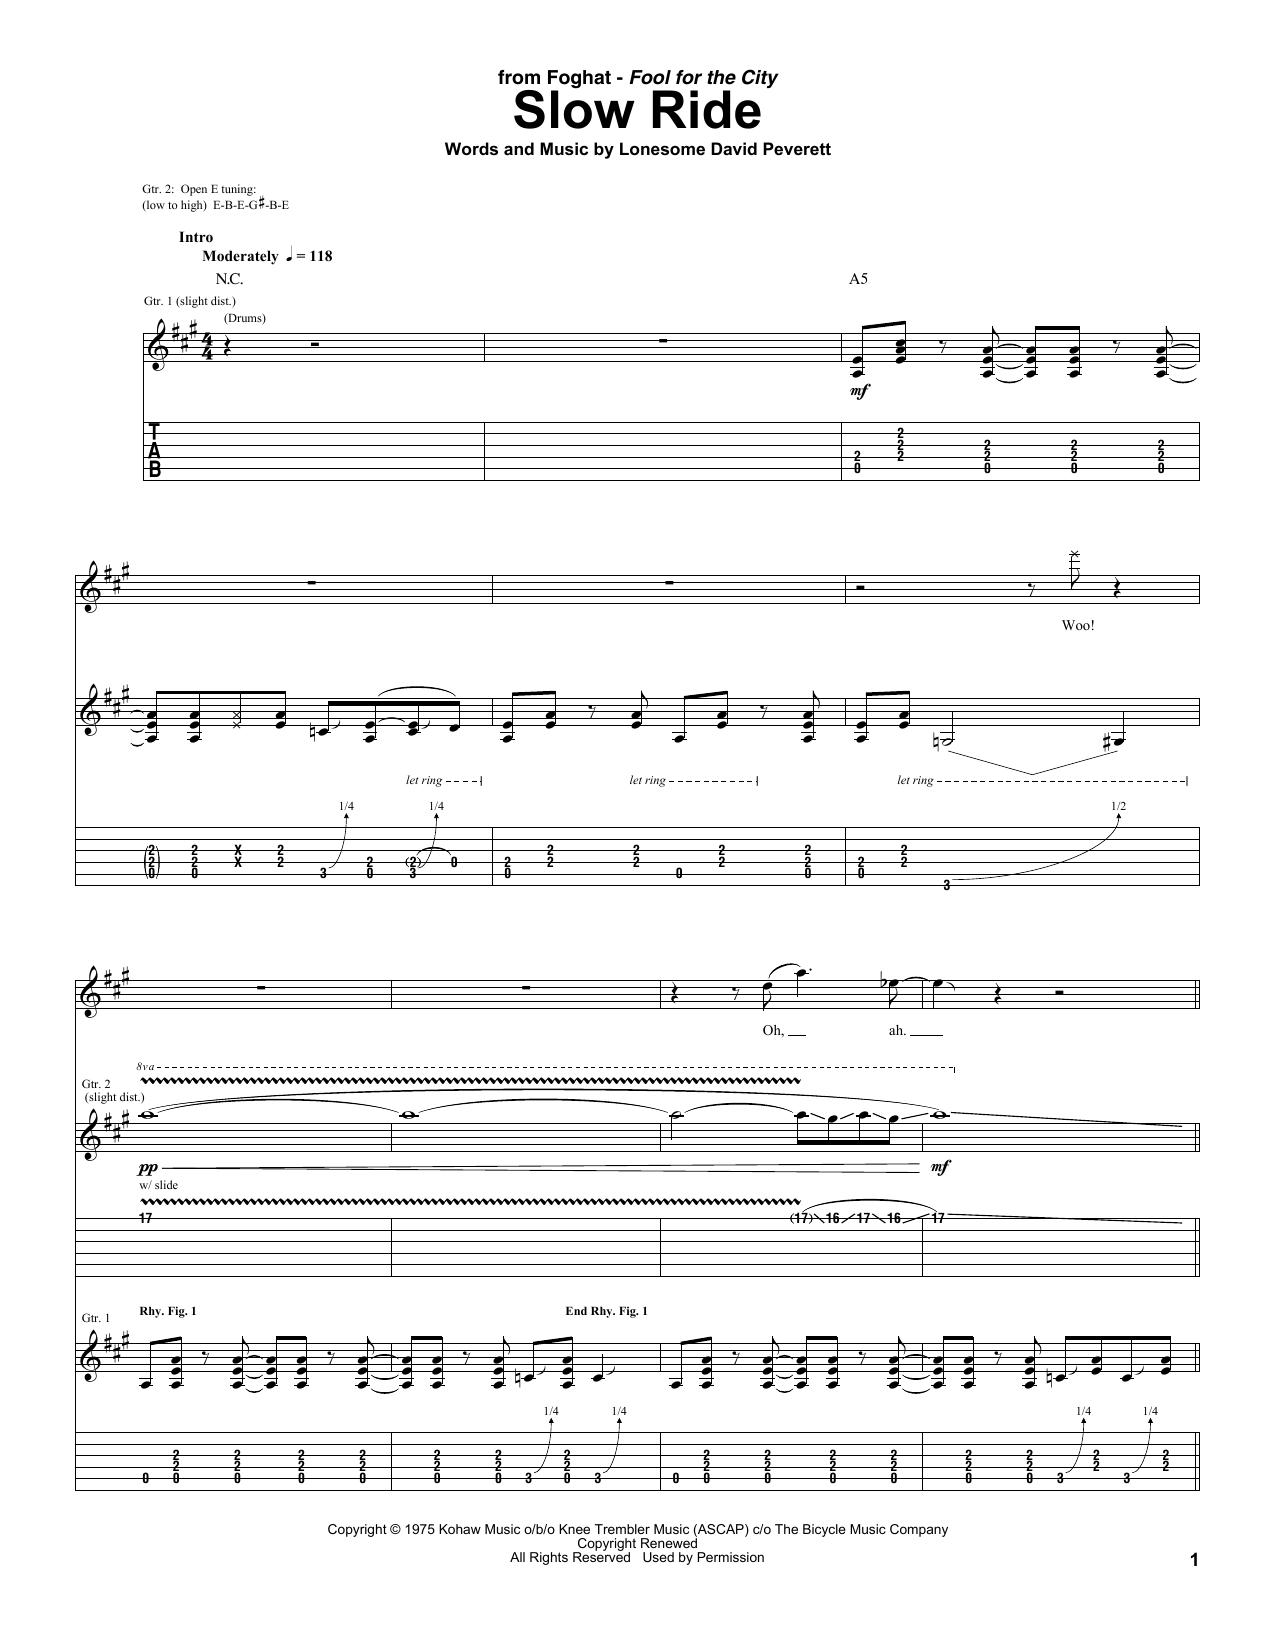 Foghat Slow Ride Sheet Music Notes & Chords for Lyrics & Chords - Download or Print PDF